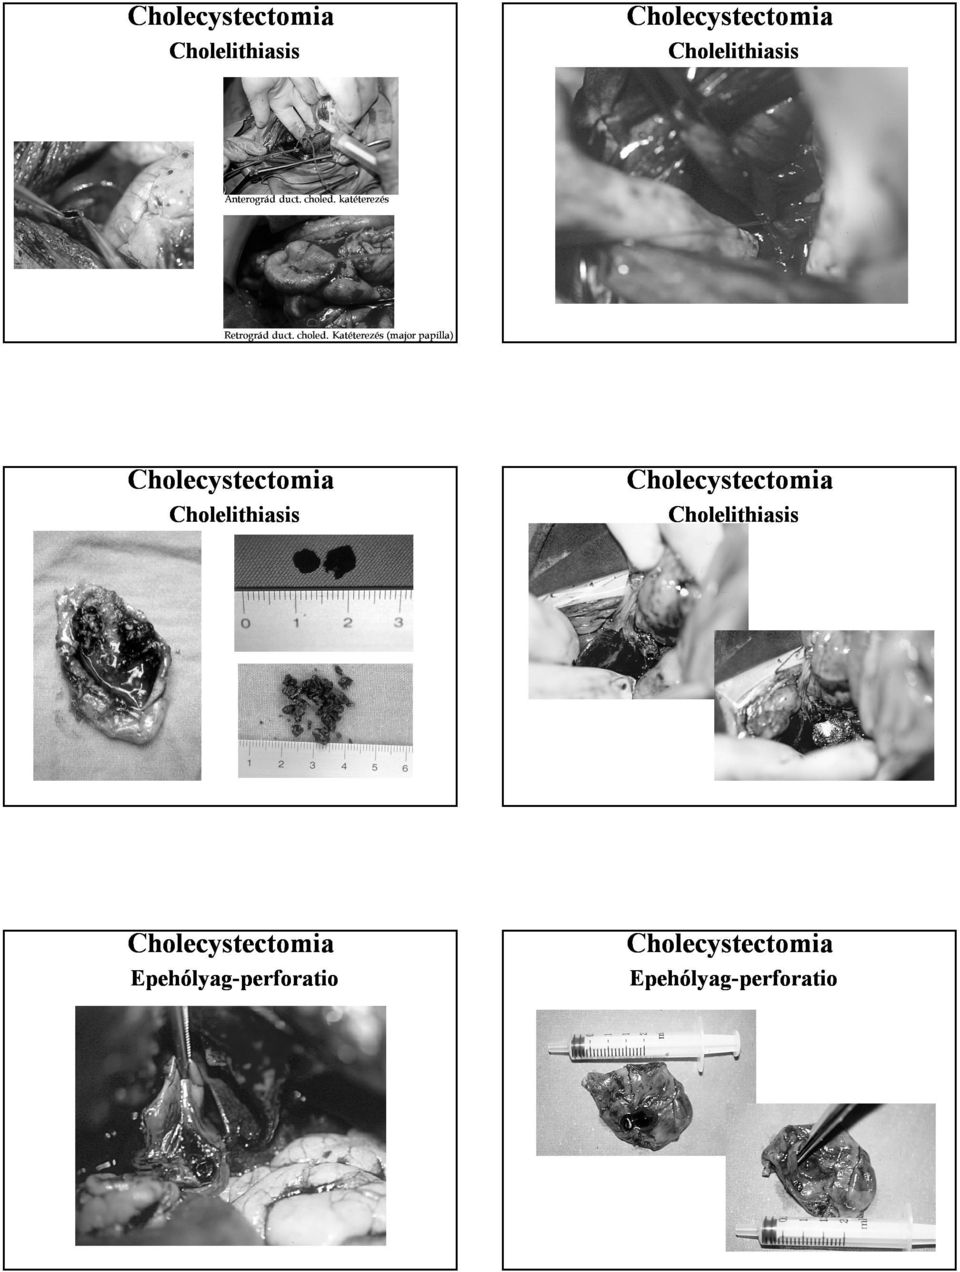 Katéterezés (major papilla) Cholelithiasis